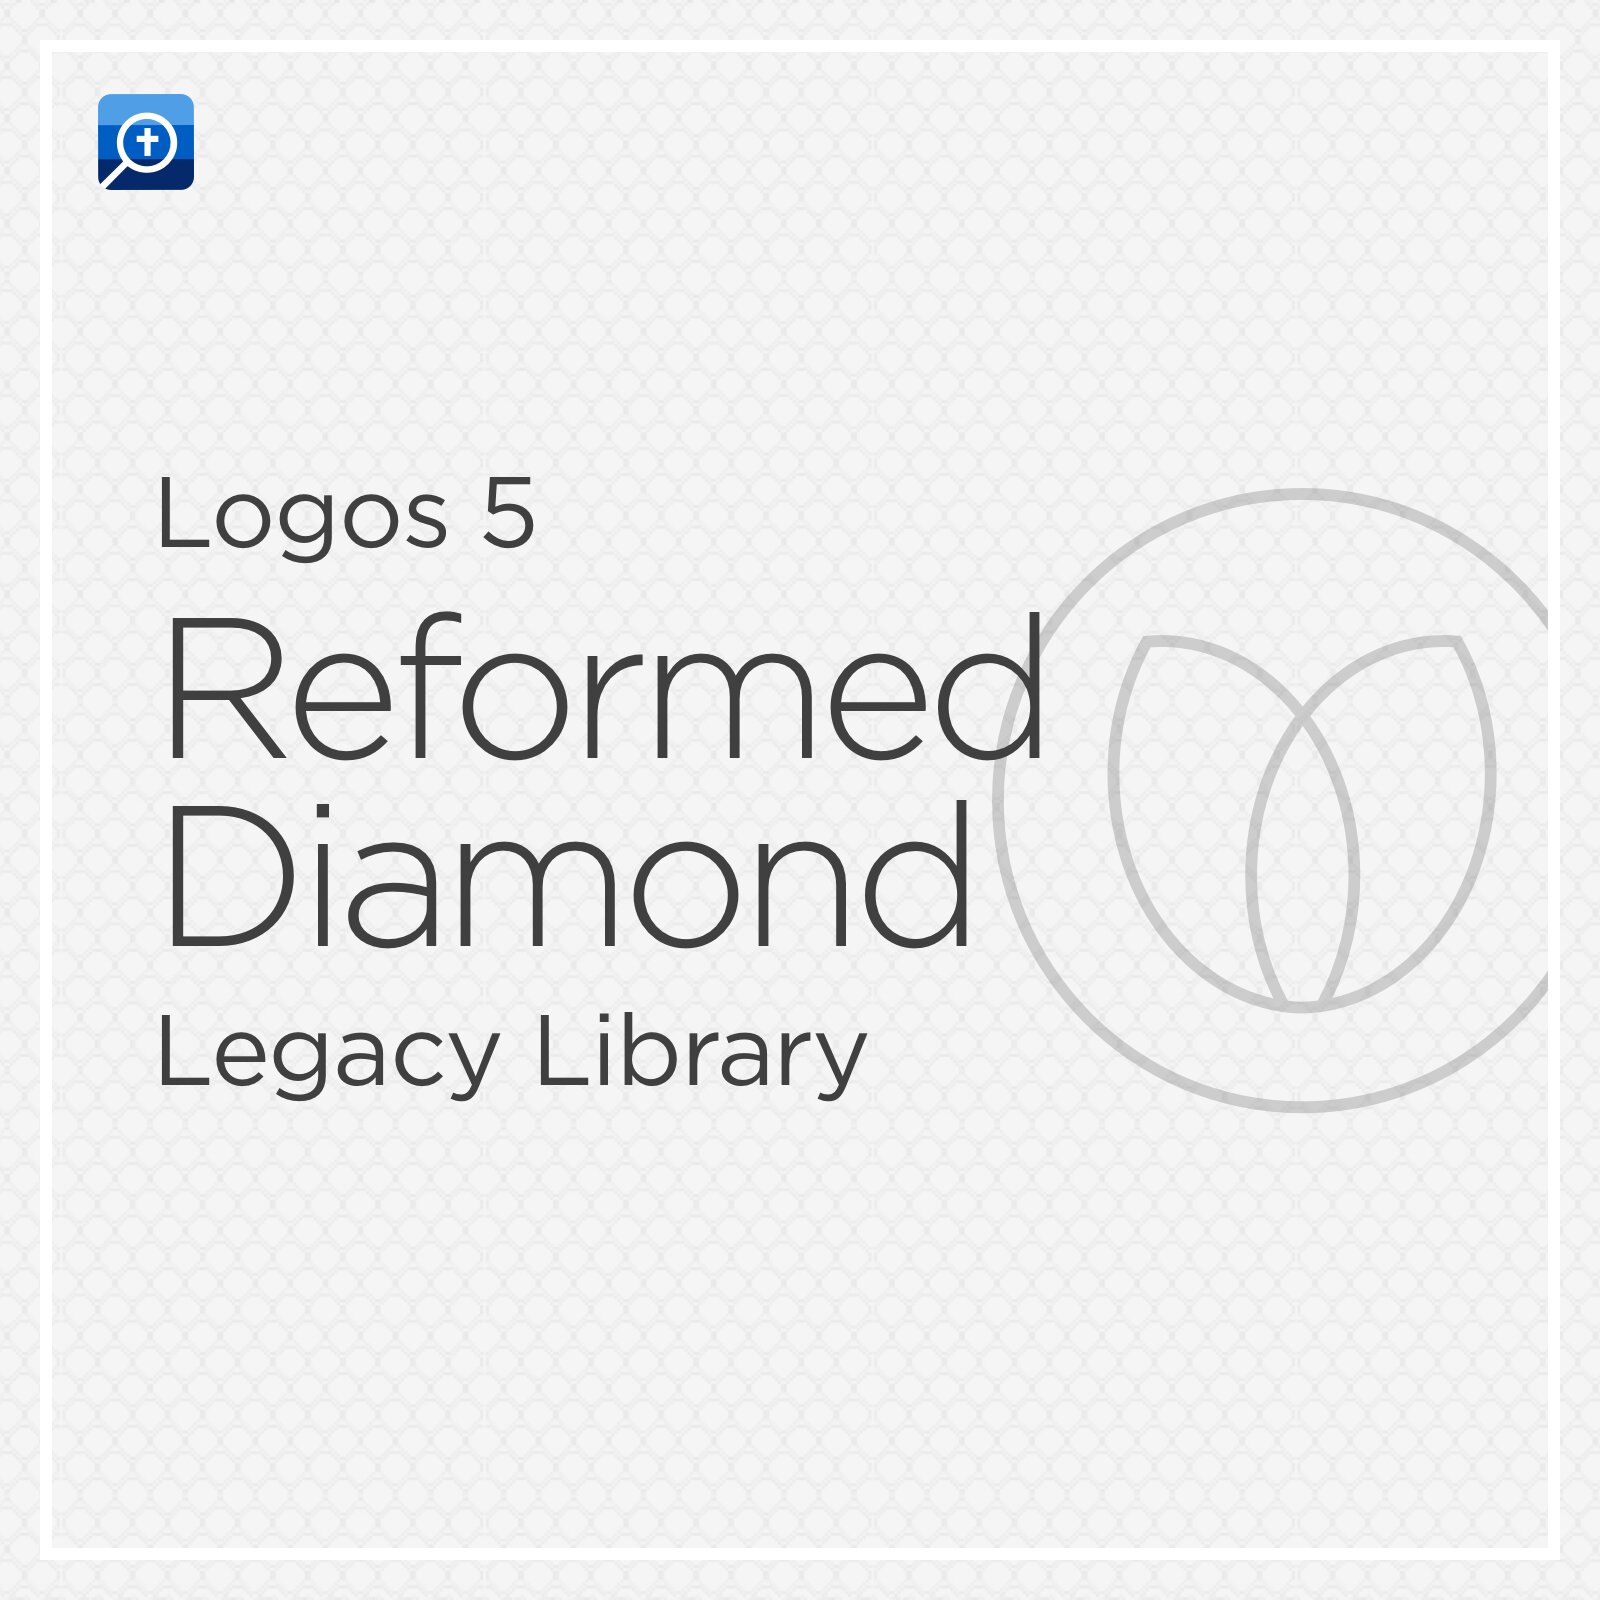 Logos 5 Reformed Diamond Legacy Library